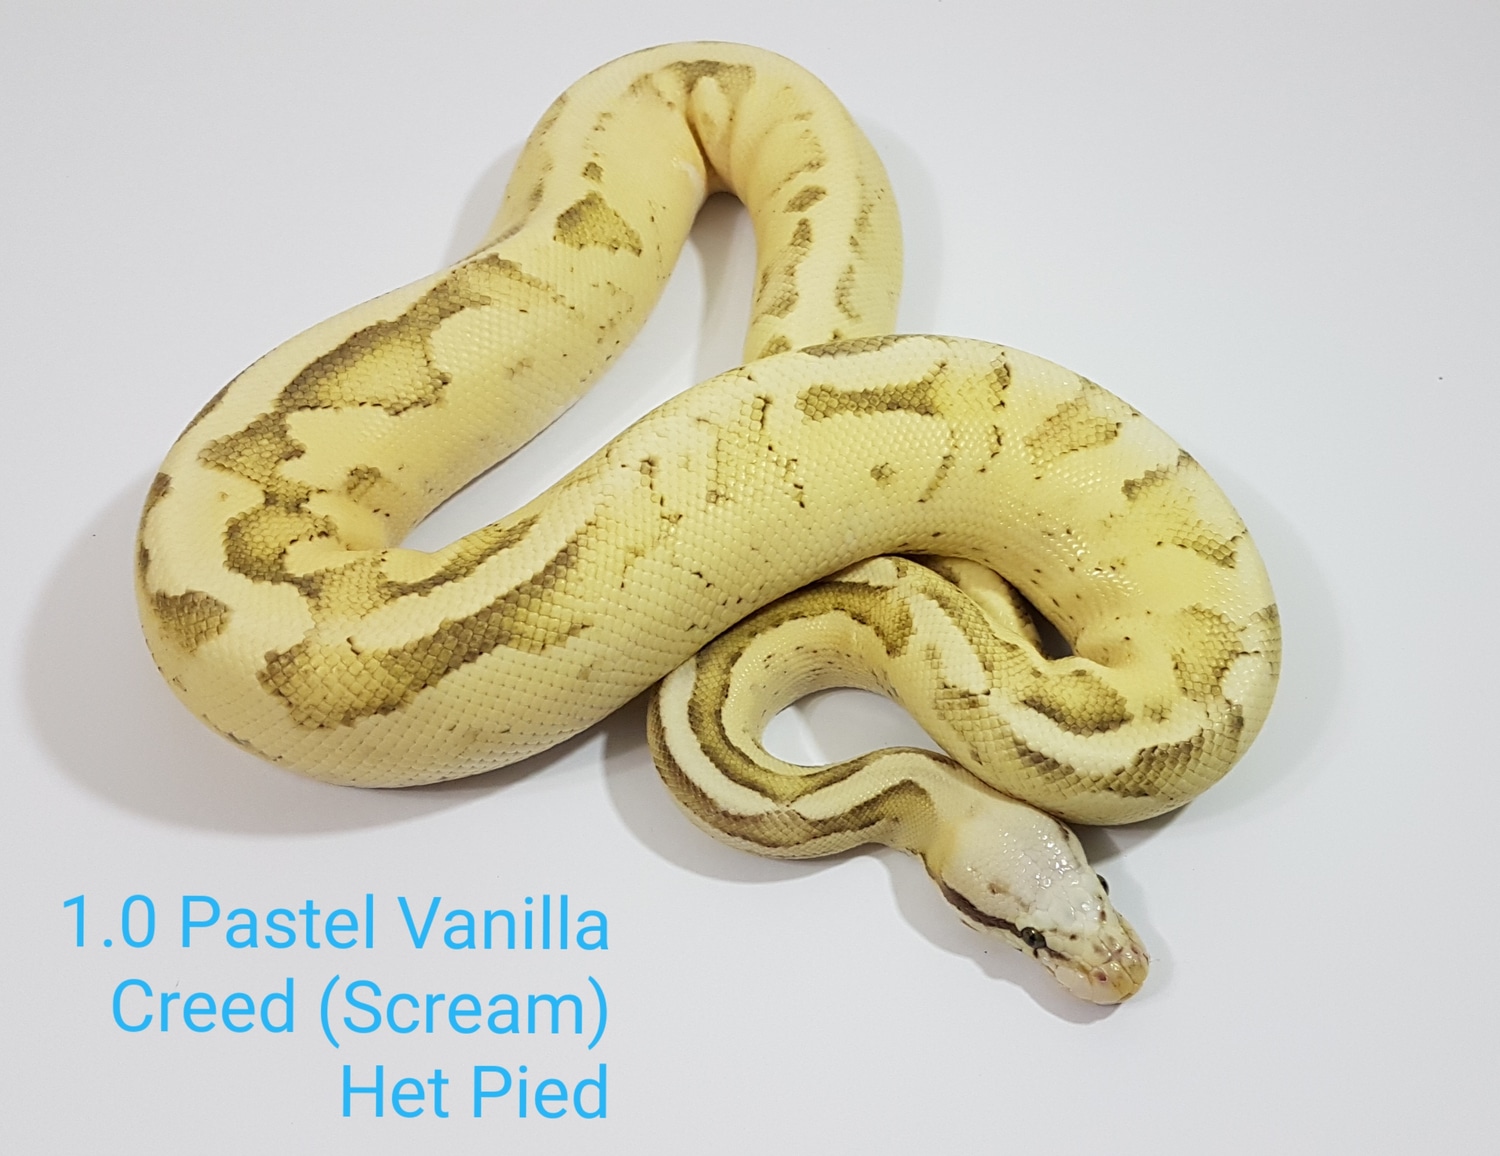 Pastel Vanilla Creed (Scream) 100% Het Pied Ball Python by DNJ Pythons